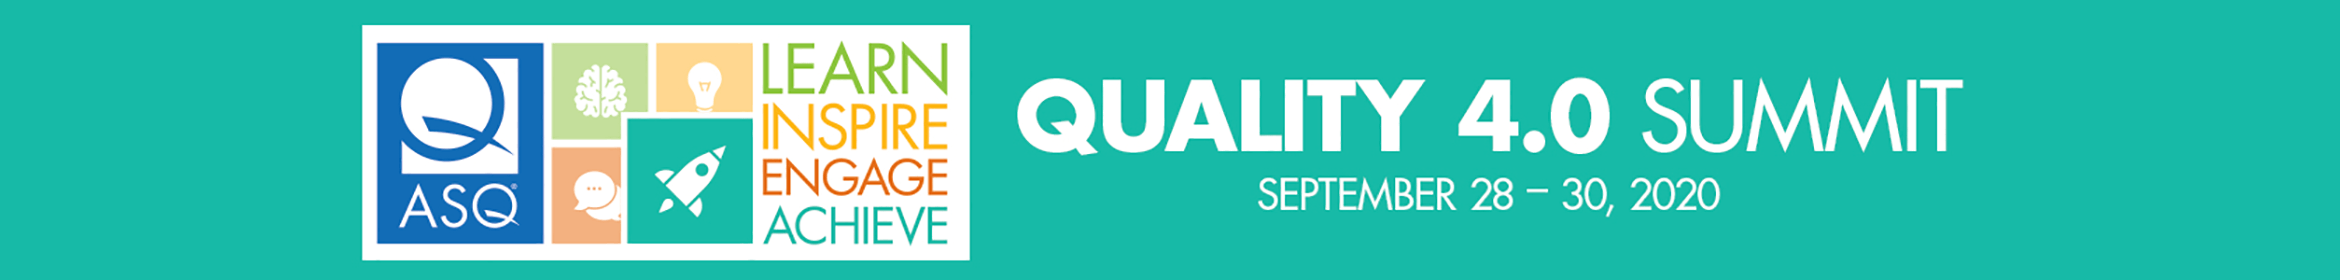 ASQ-Banner_quality-4-0-event-sept-28-29